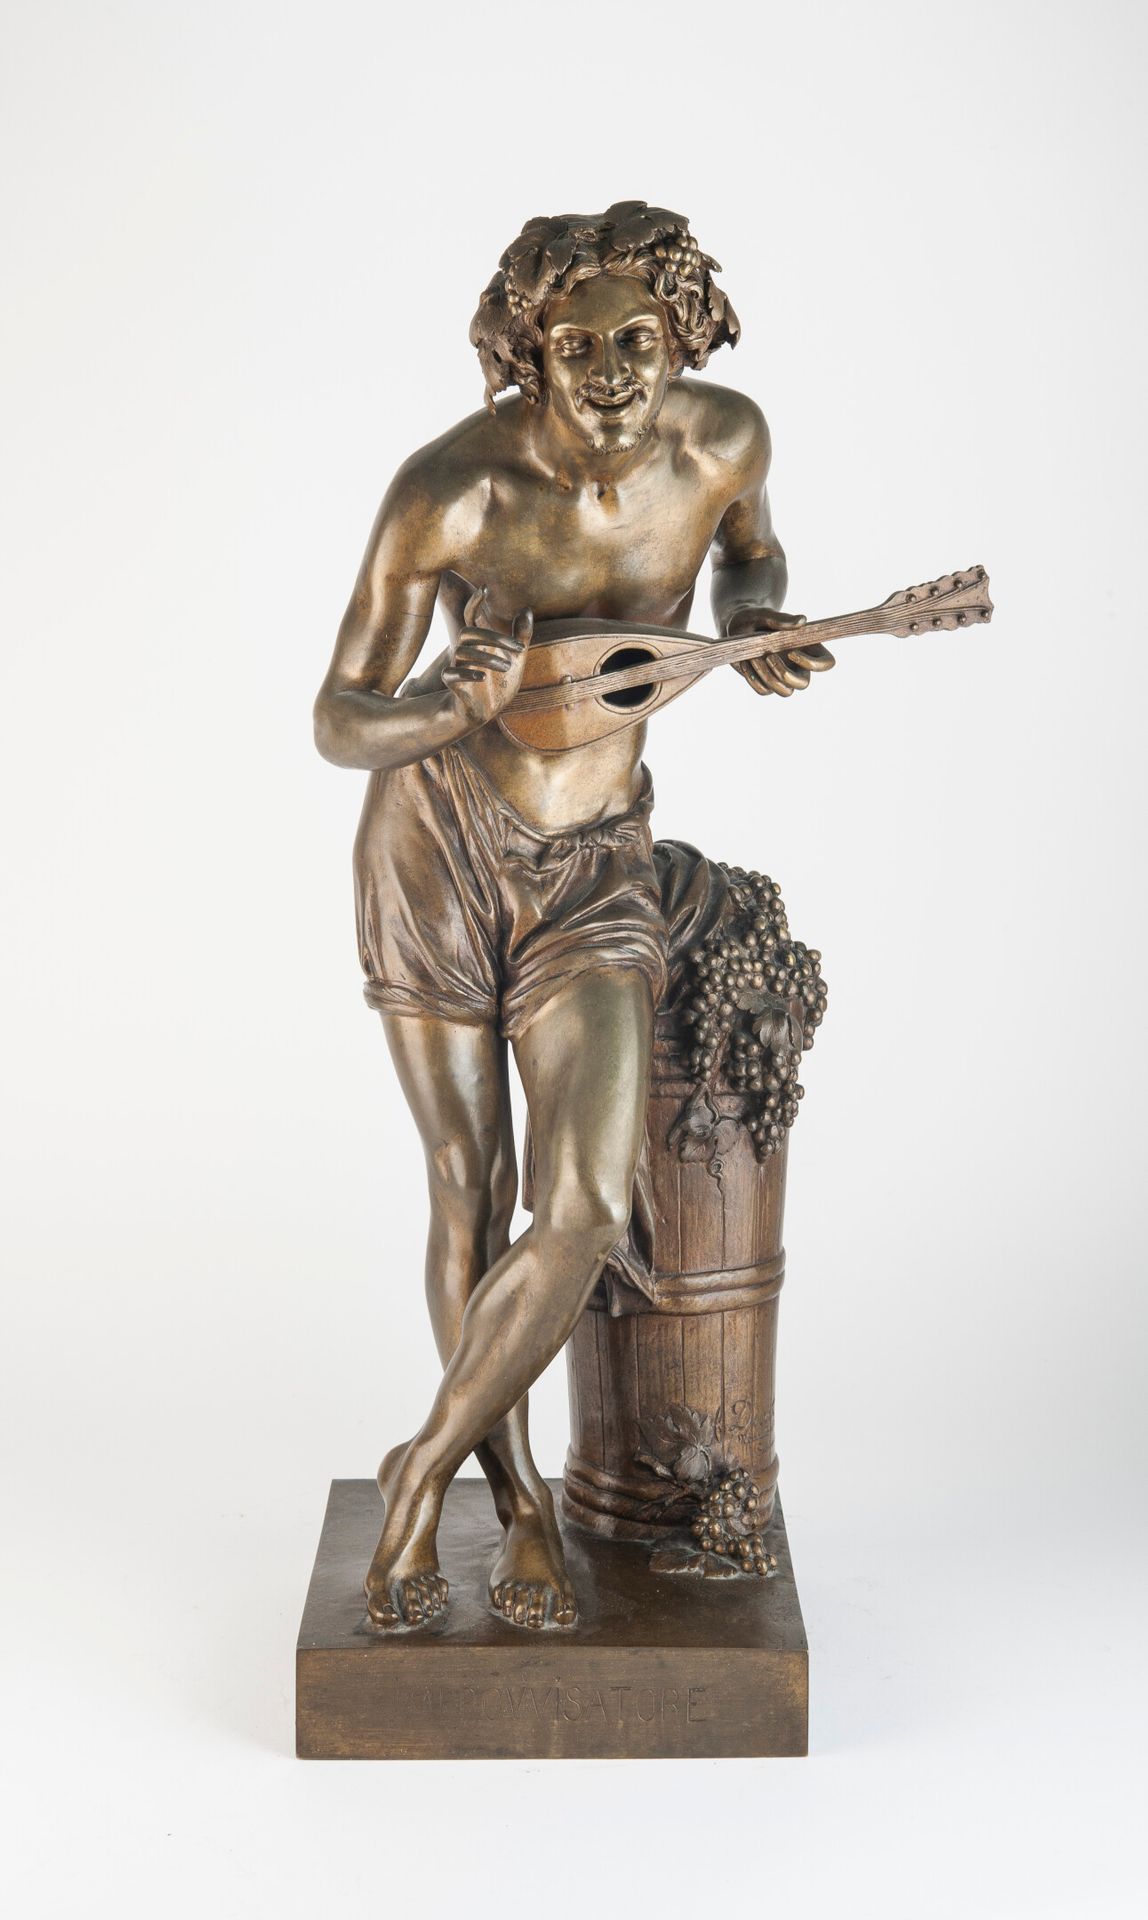 D'après Francisque Joseph DURET (1804-1865) "Improvisatore".
Proof in bronze wit&hellip;